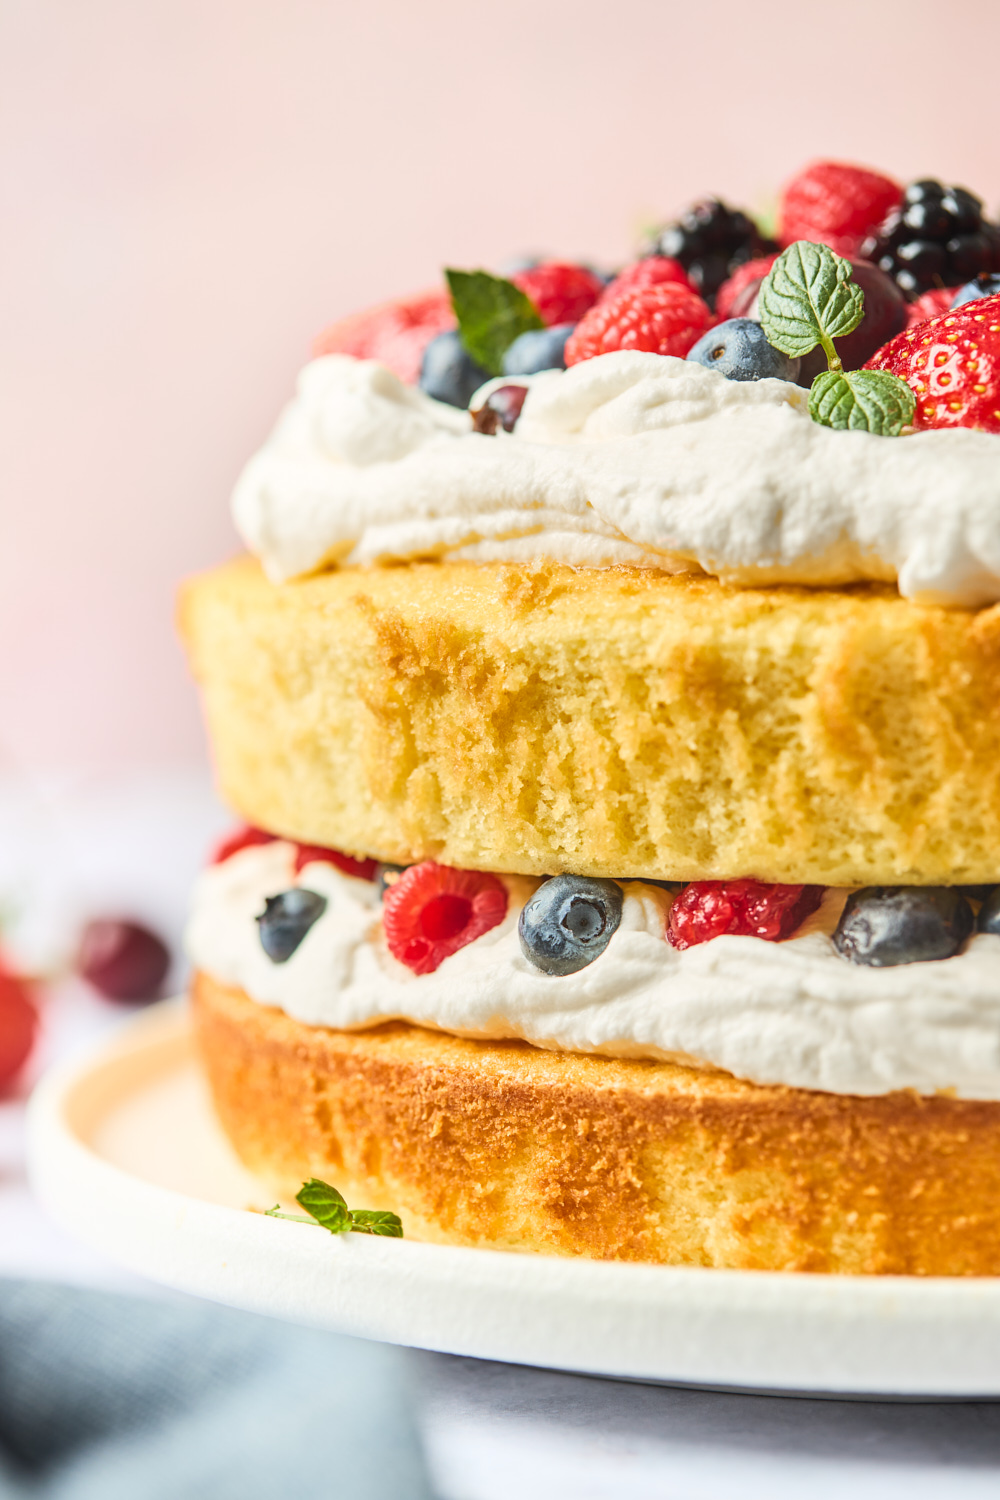 Vanilla Sponge Cake Recipe With Berries and Cream